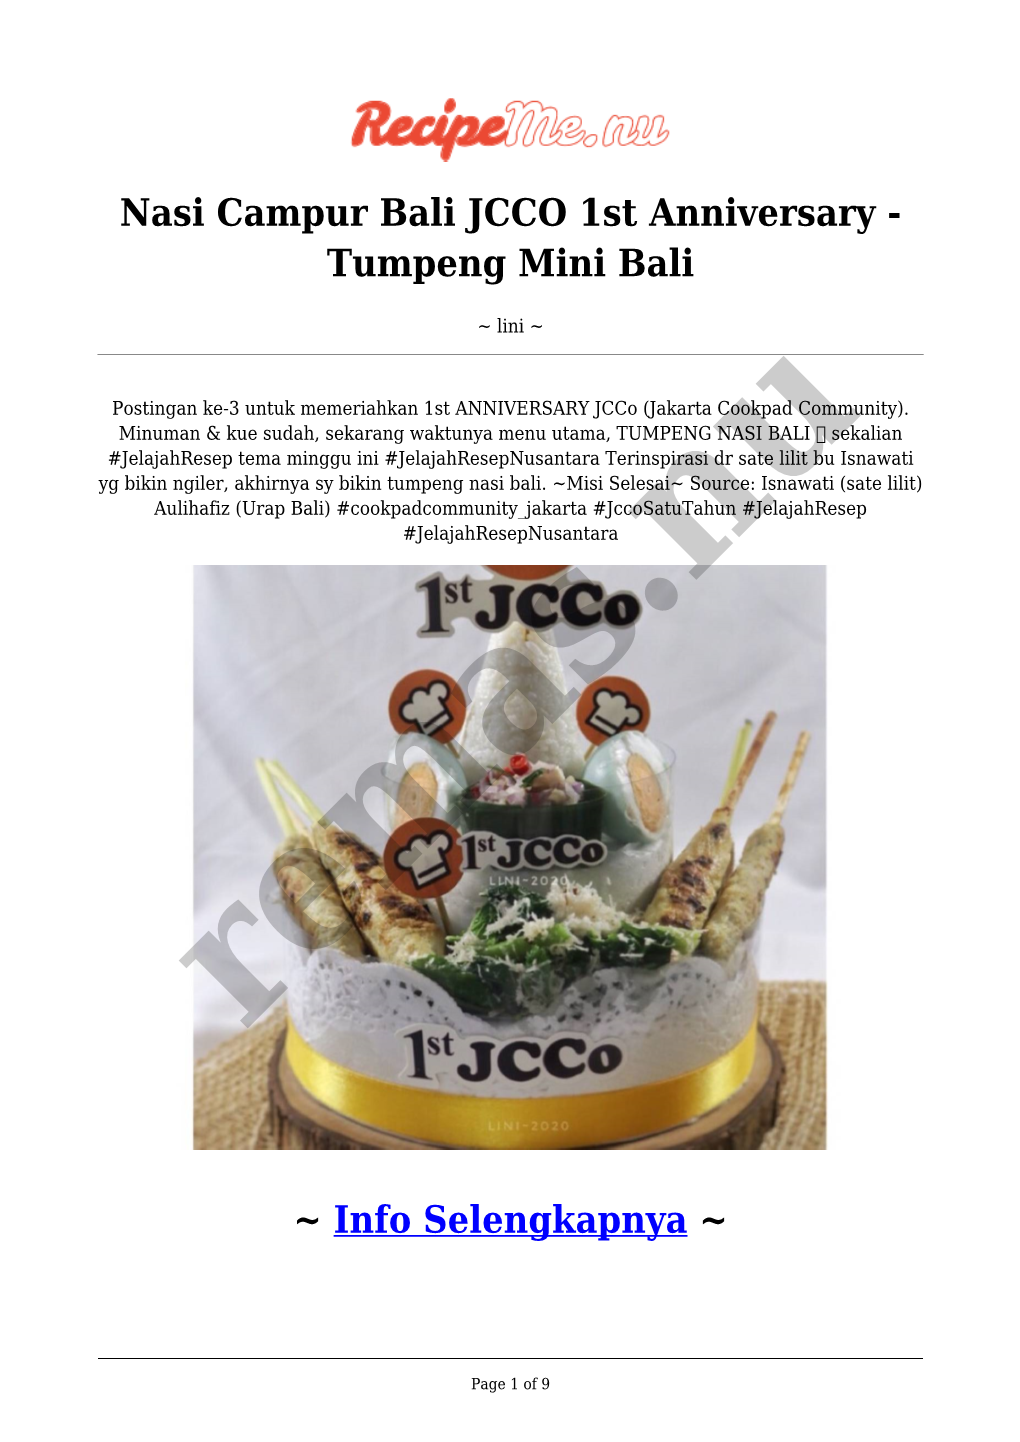 Nasi Campur Bali JCCO 1St Anniversary - Tumpeng Mini Bali